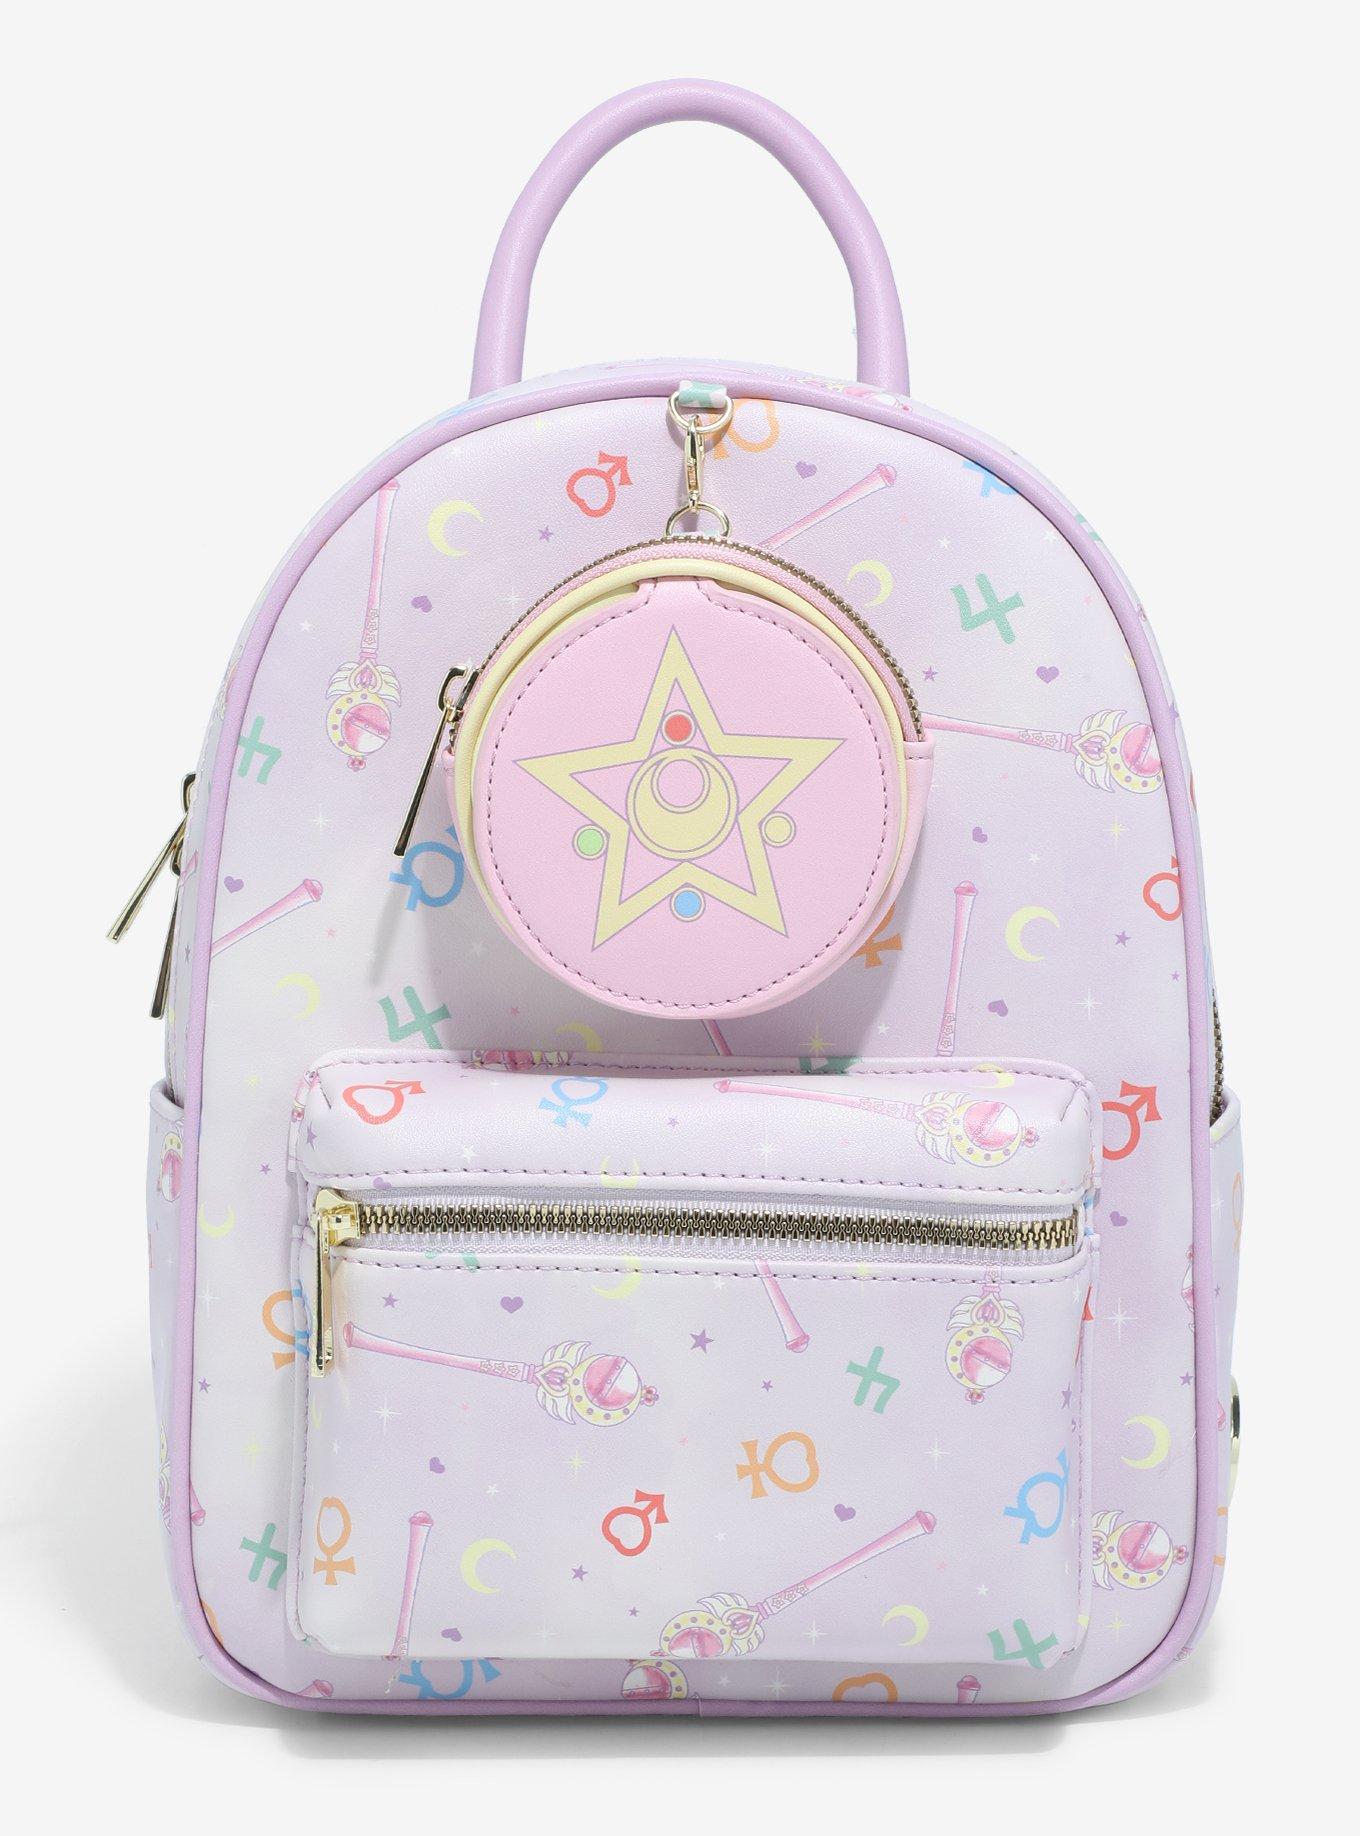 Sailor Moon, Bags